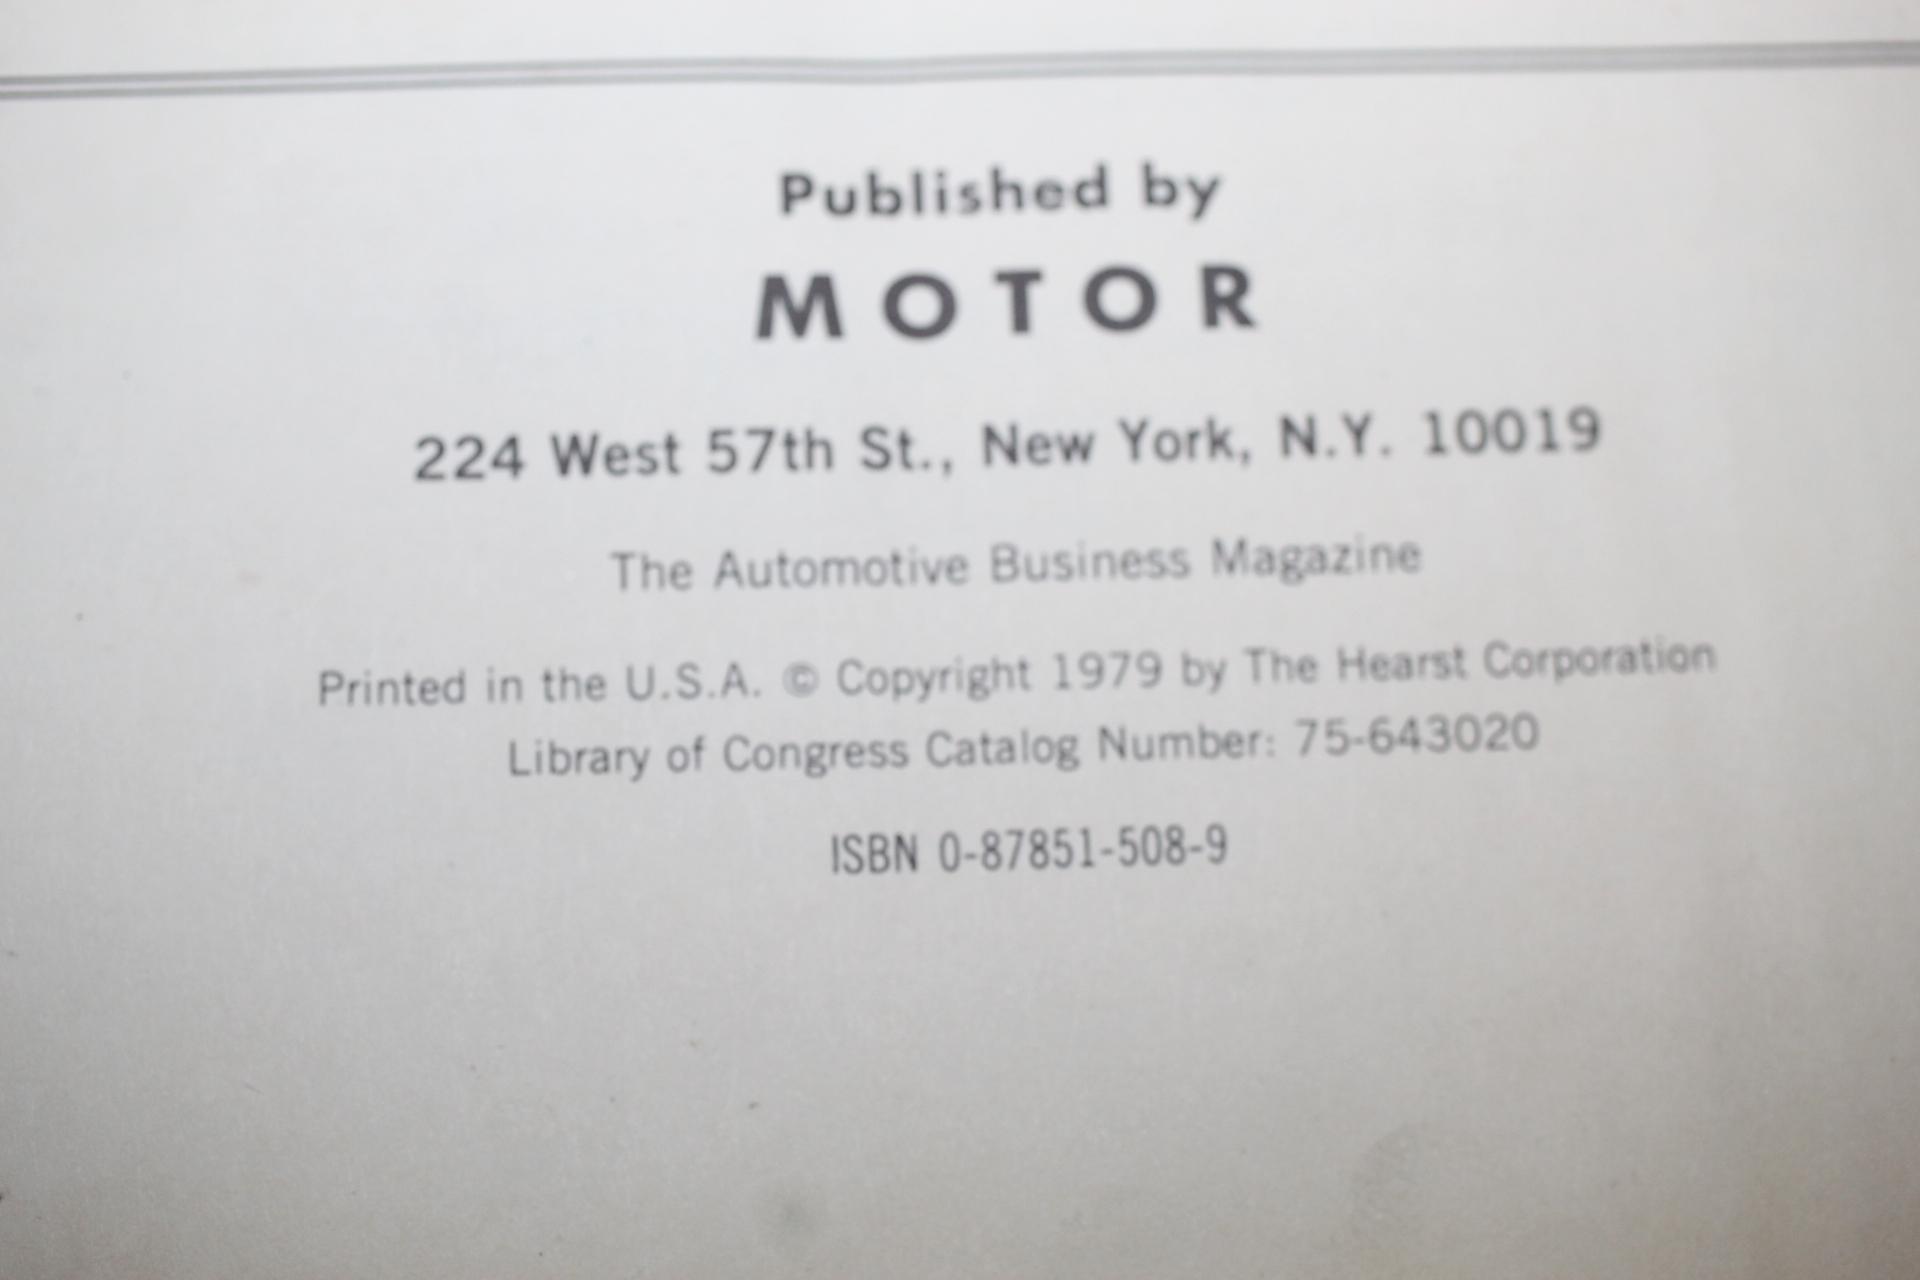 Auto Repair Manual 1980 Book, 1975-1980 Models, 43rd Edition, 1979, Motor, Hard Cover